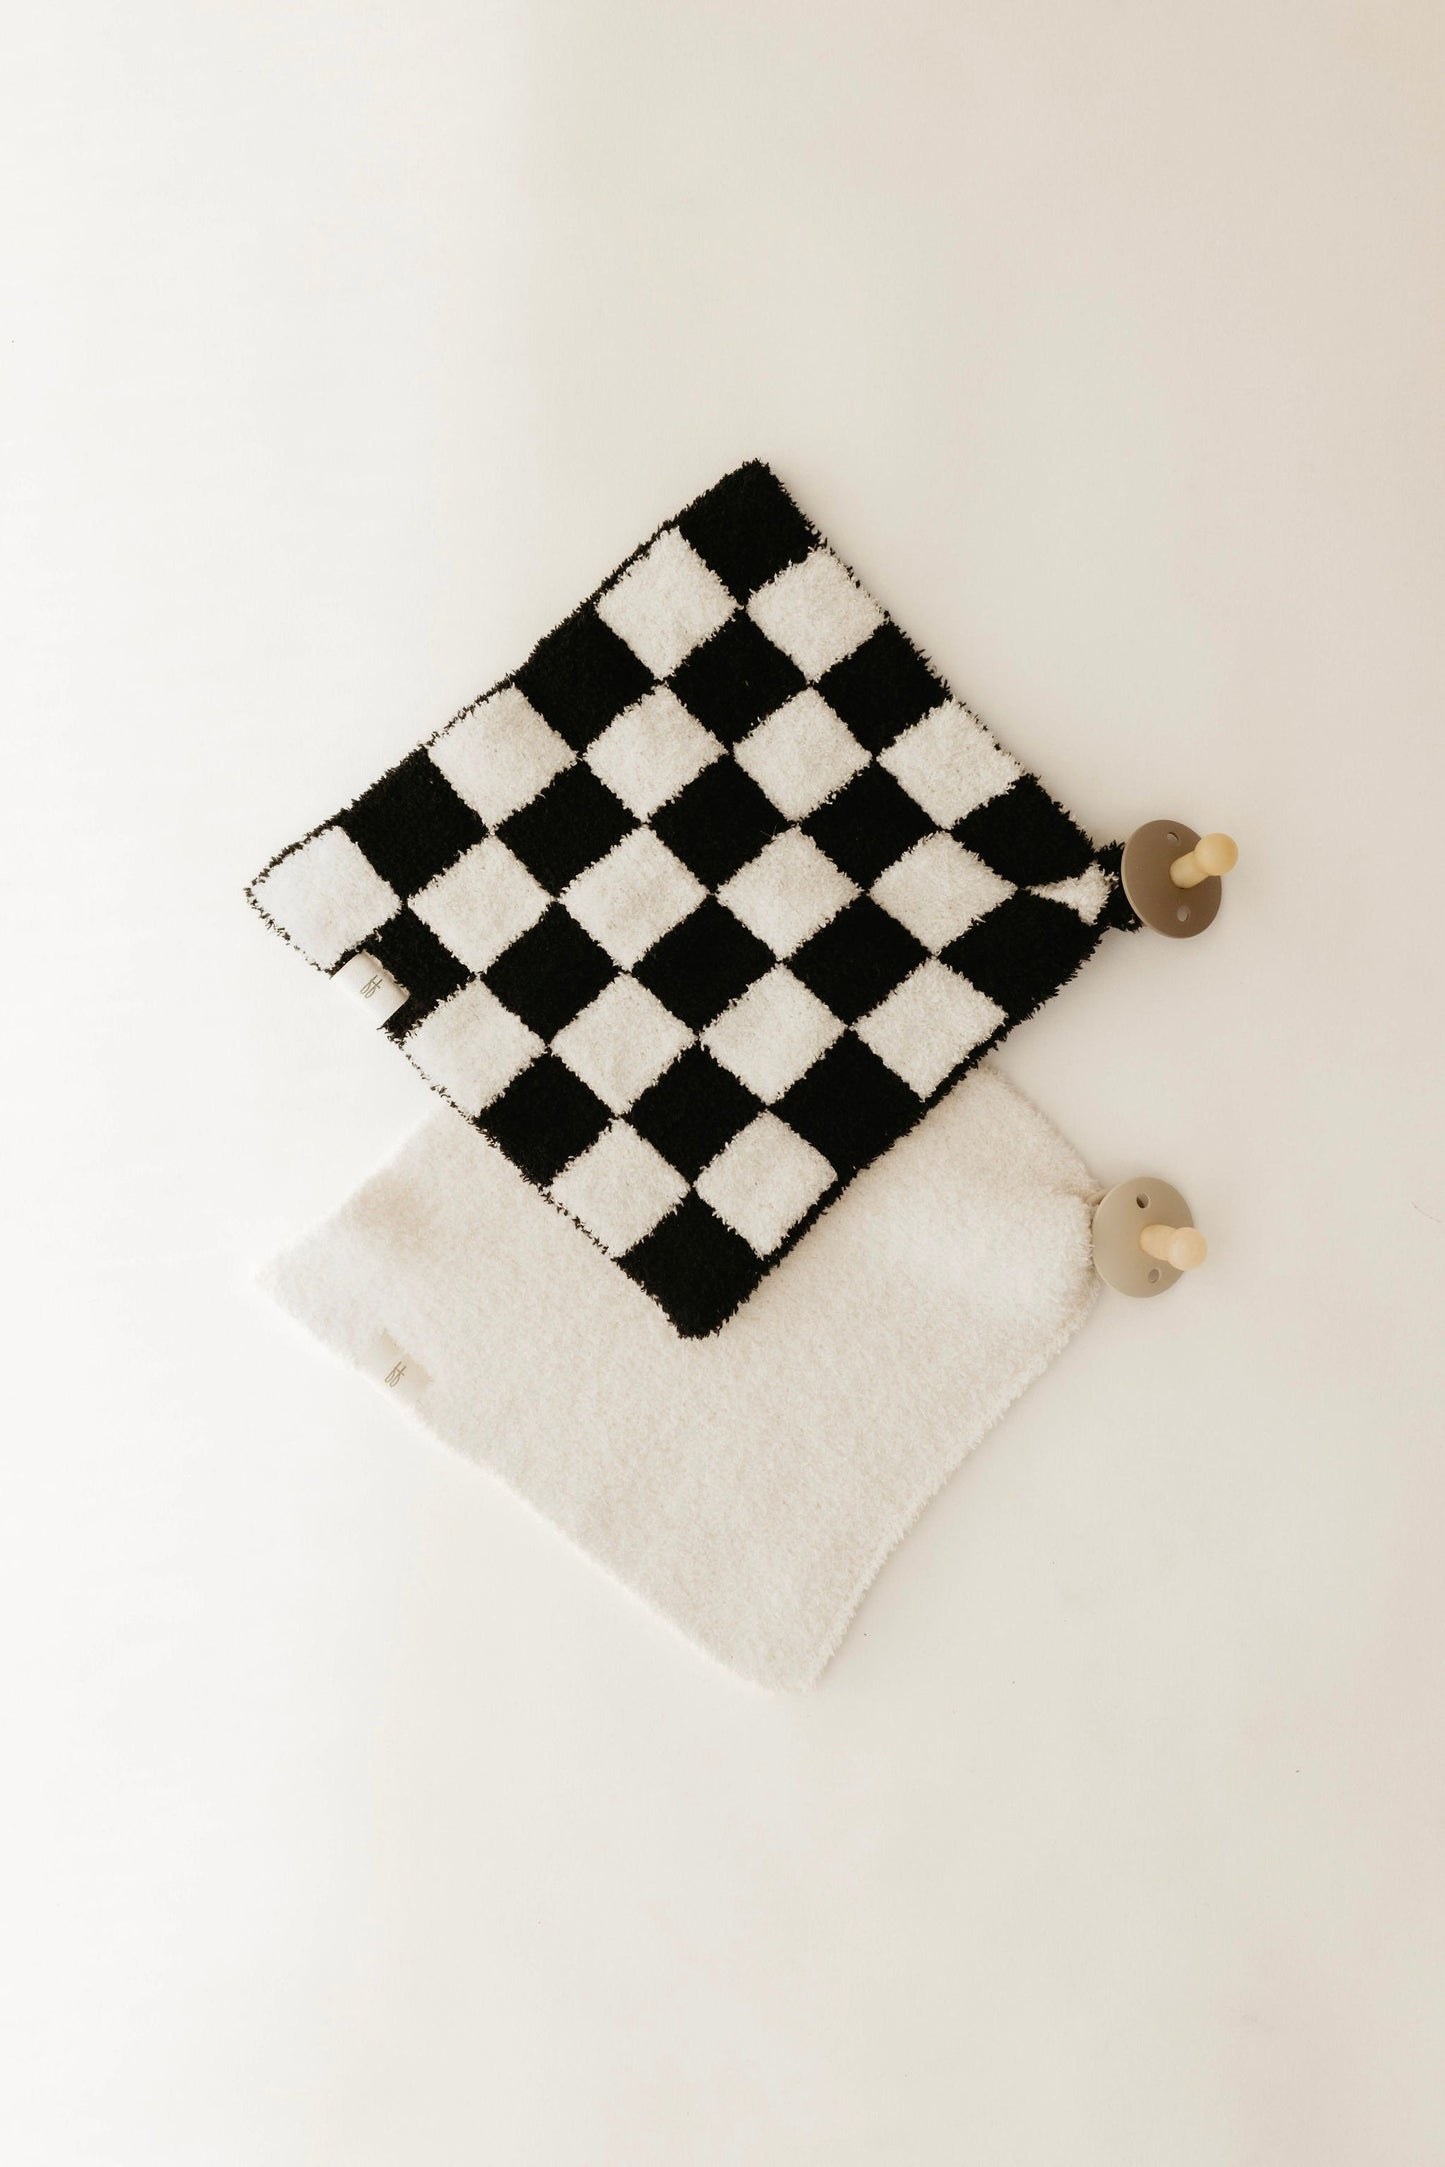 Black & White Checkered | Lovey